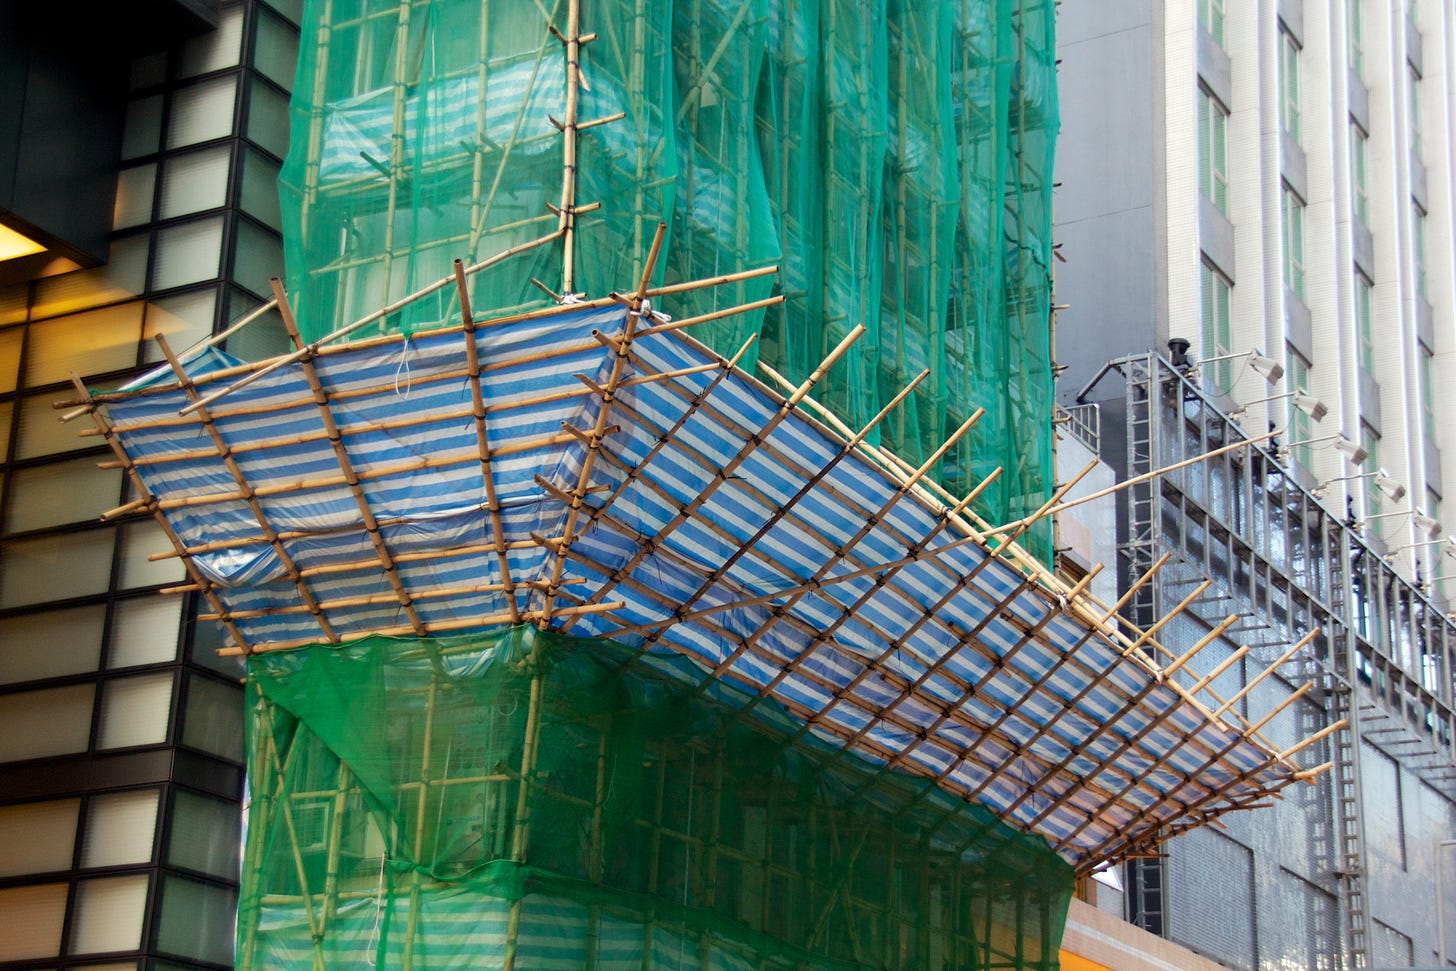 File:Bamboo scaffolding, Hong Kong 3.jpg - Wikimedia Commons